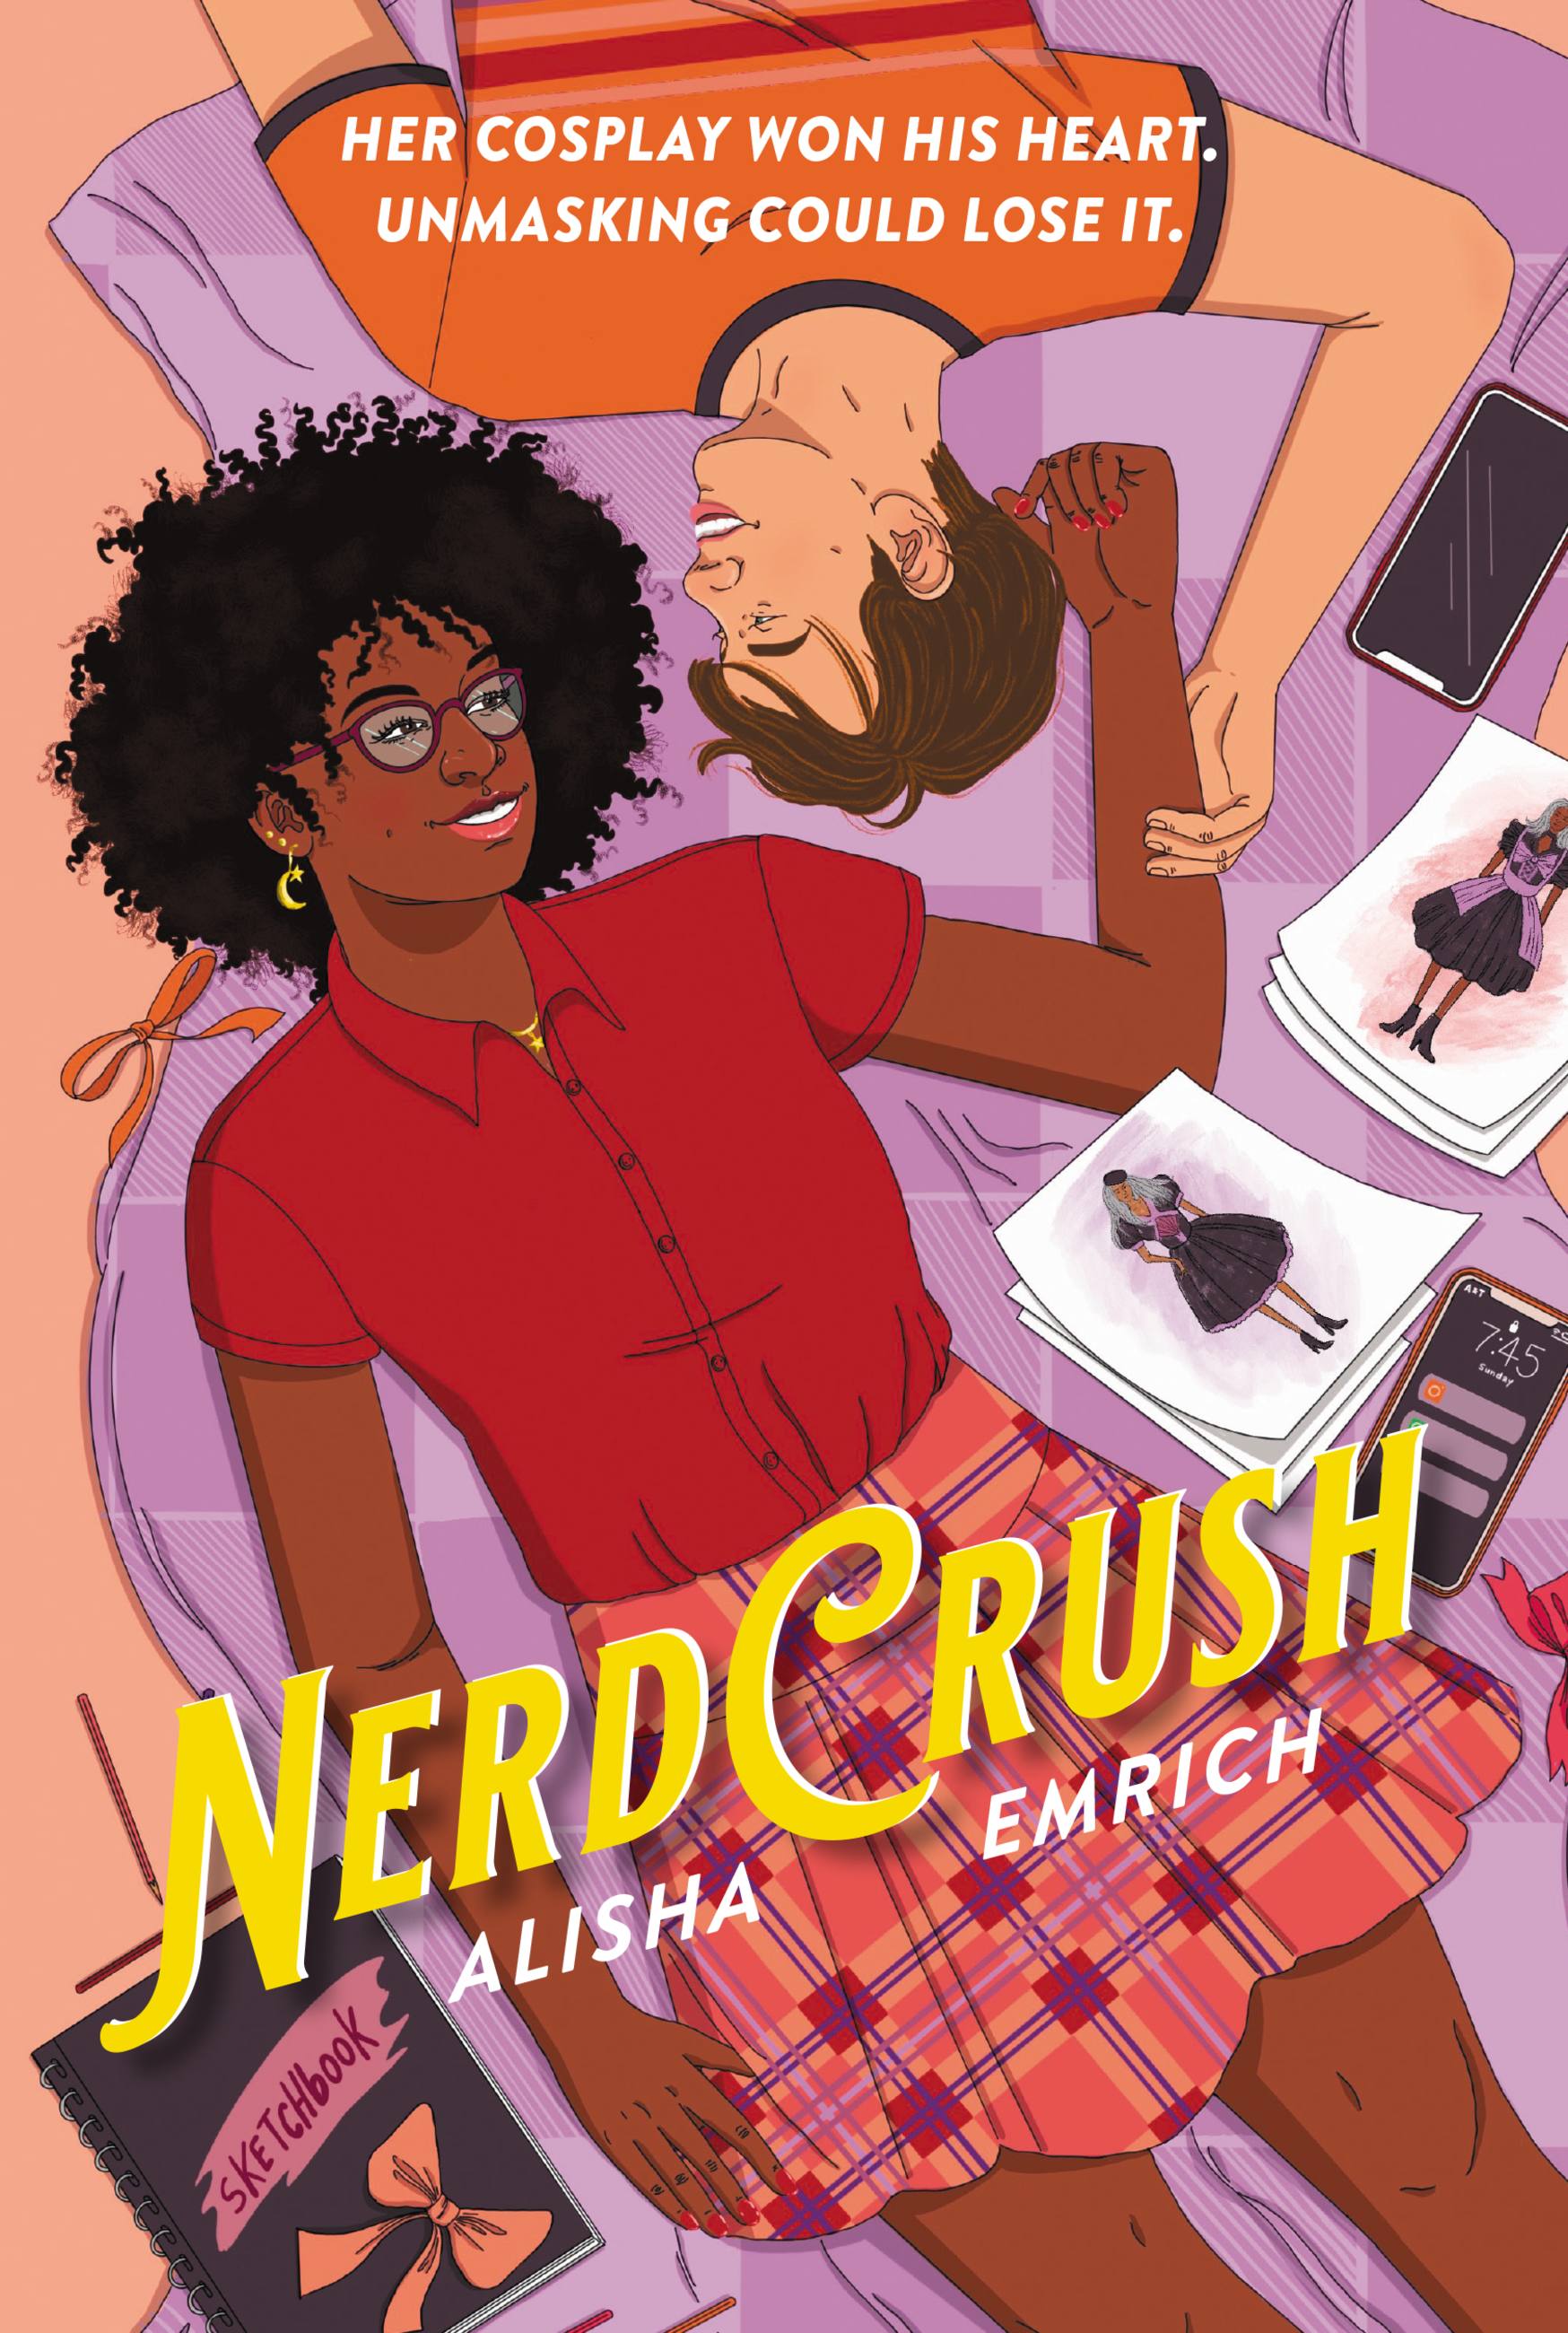 NerdCrush by Alisha Emrich | Hachette Book Group